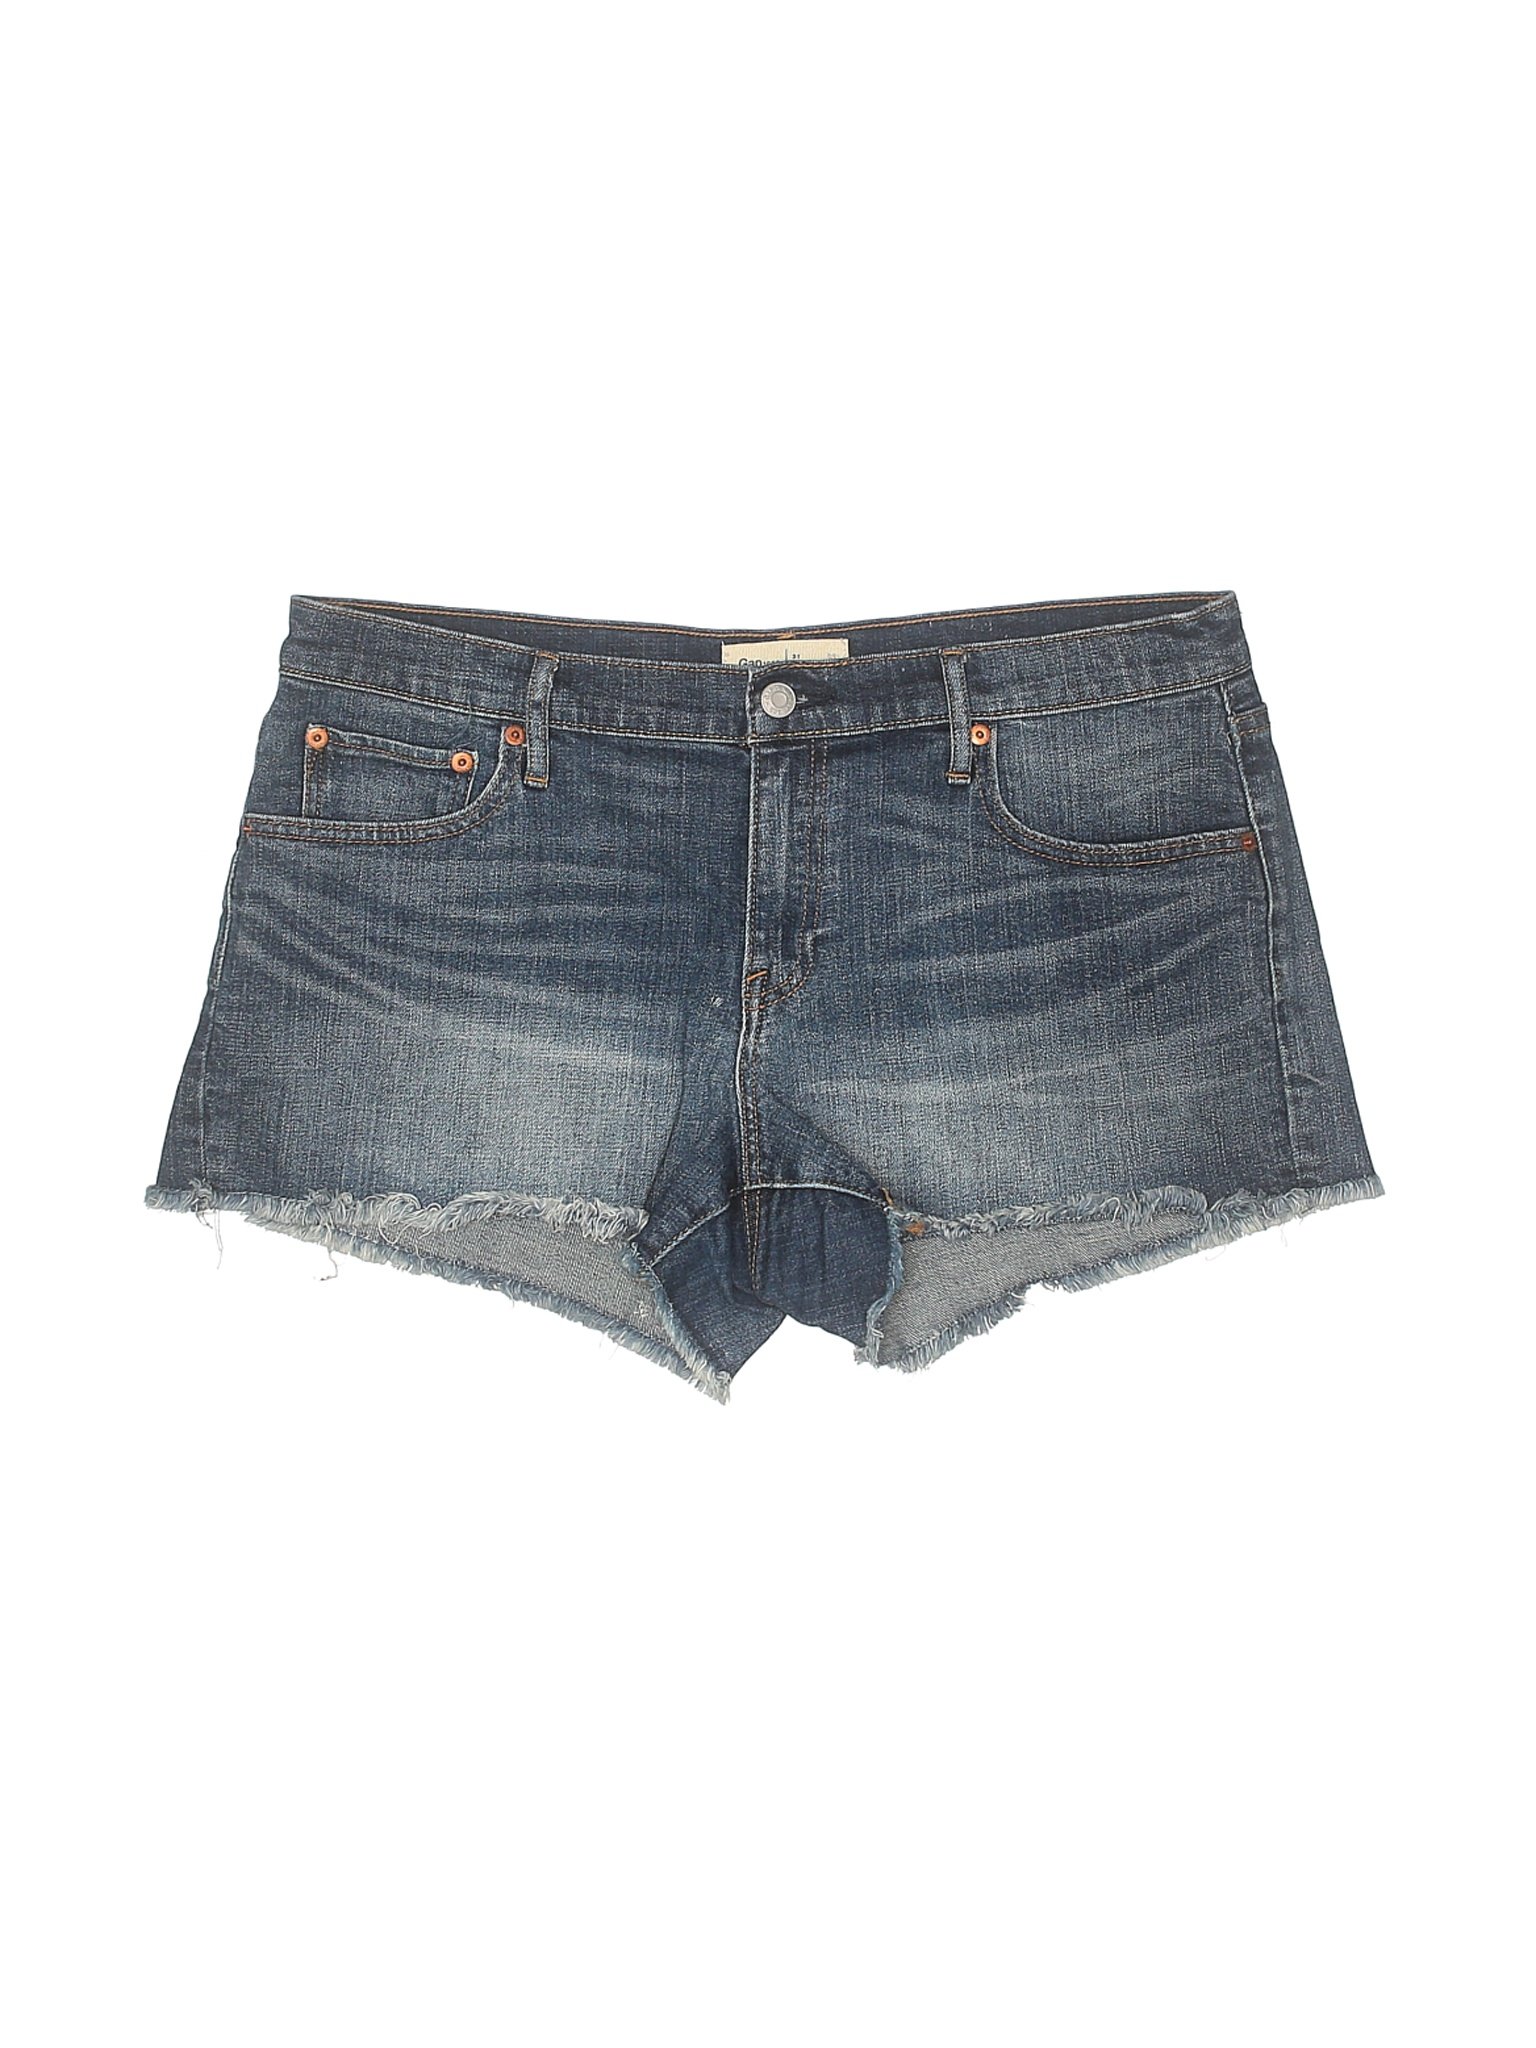 Gap Women Blue Denim Shorts 31W | eBay